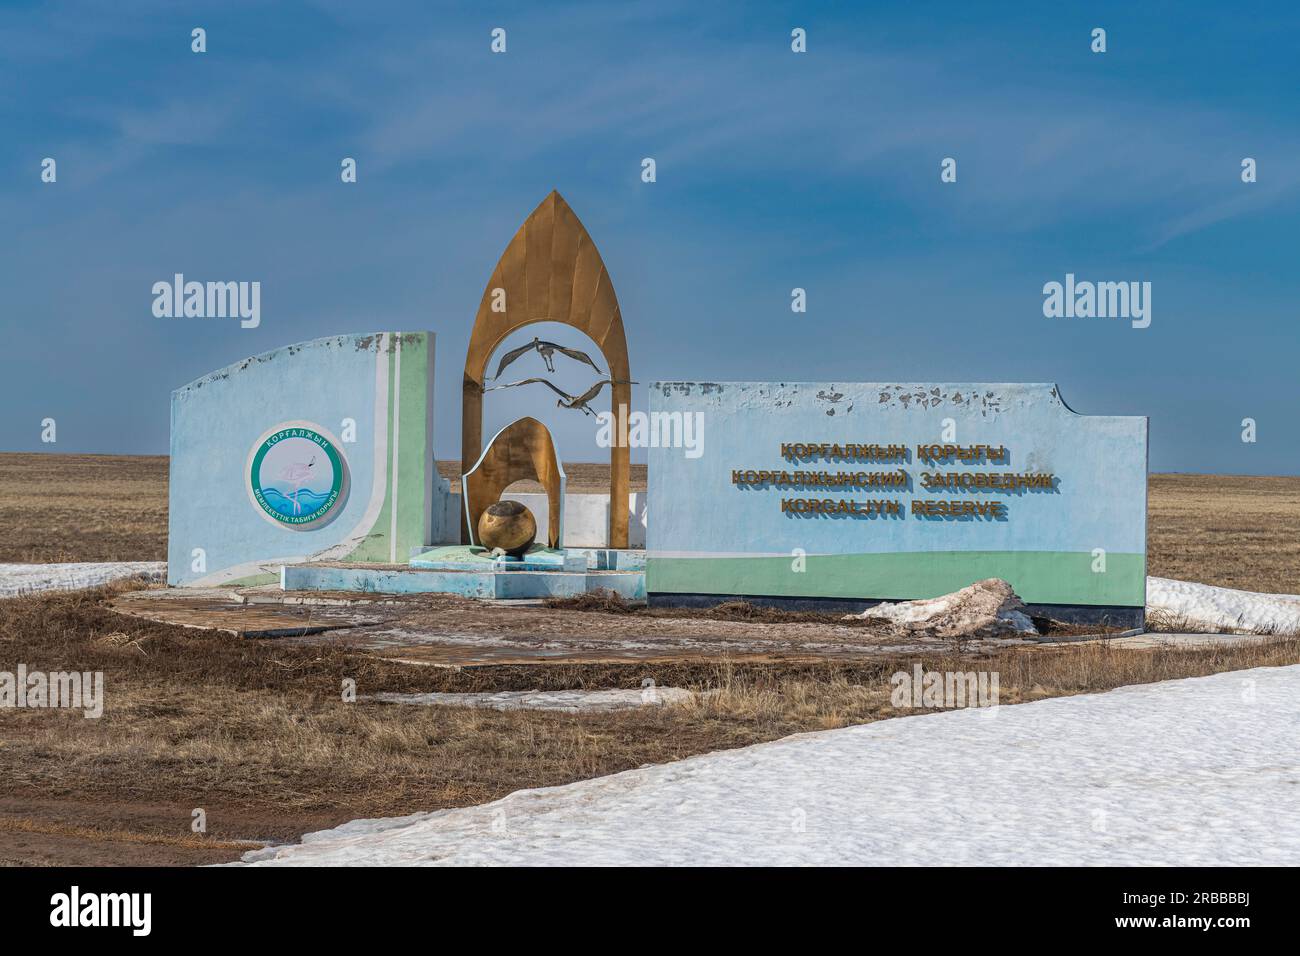 Entrance gate to the Korgalzhyn Nature Reserve, UNESCO heritage site Saryarka â€” Steppe and Lakes of Northern Kazakhstan, Kazakhstan Stock Photo